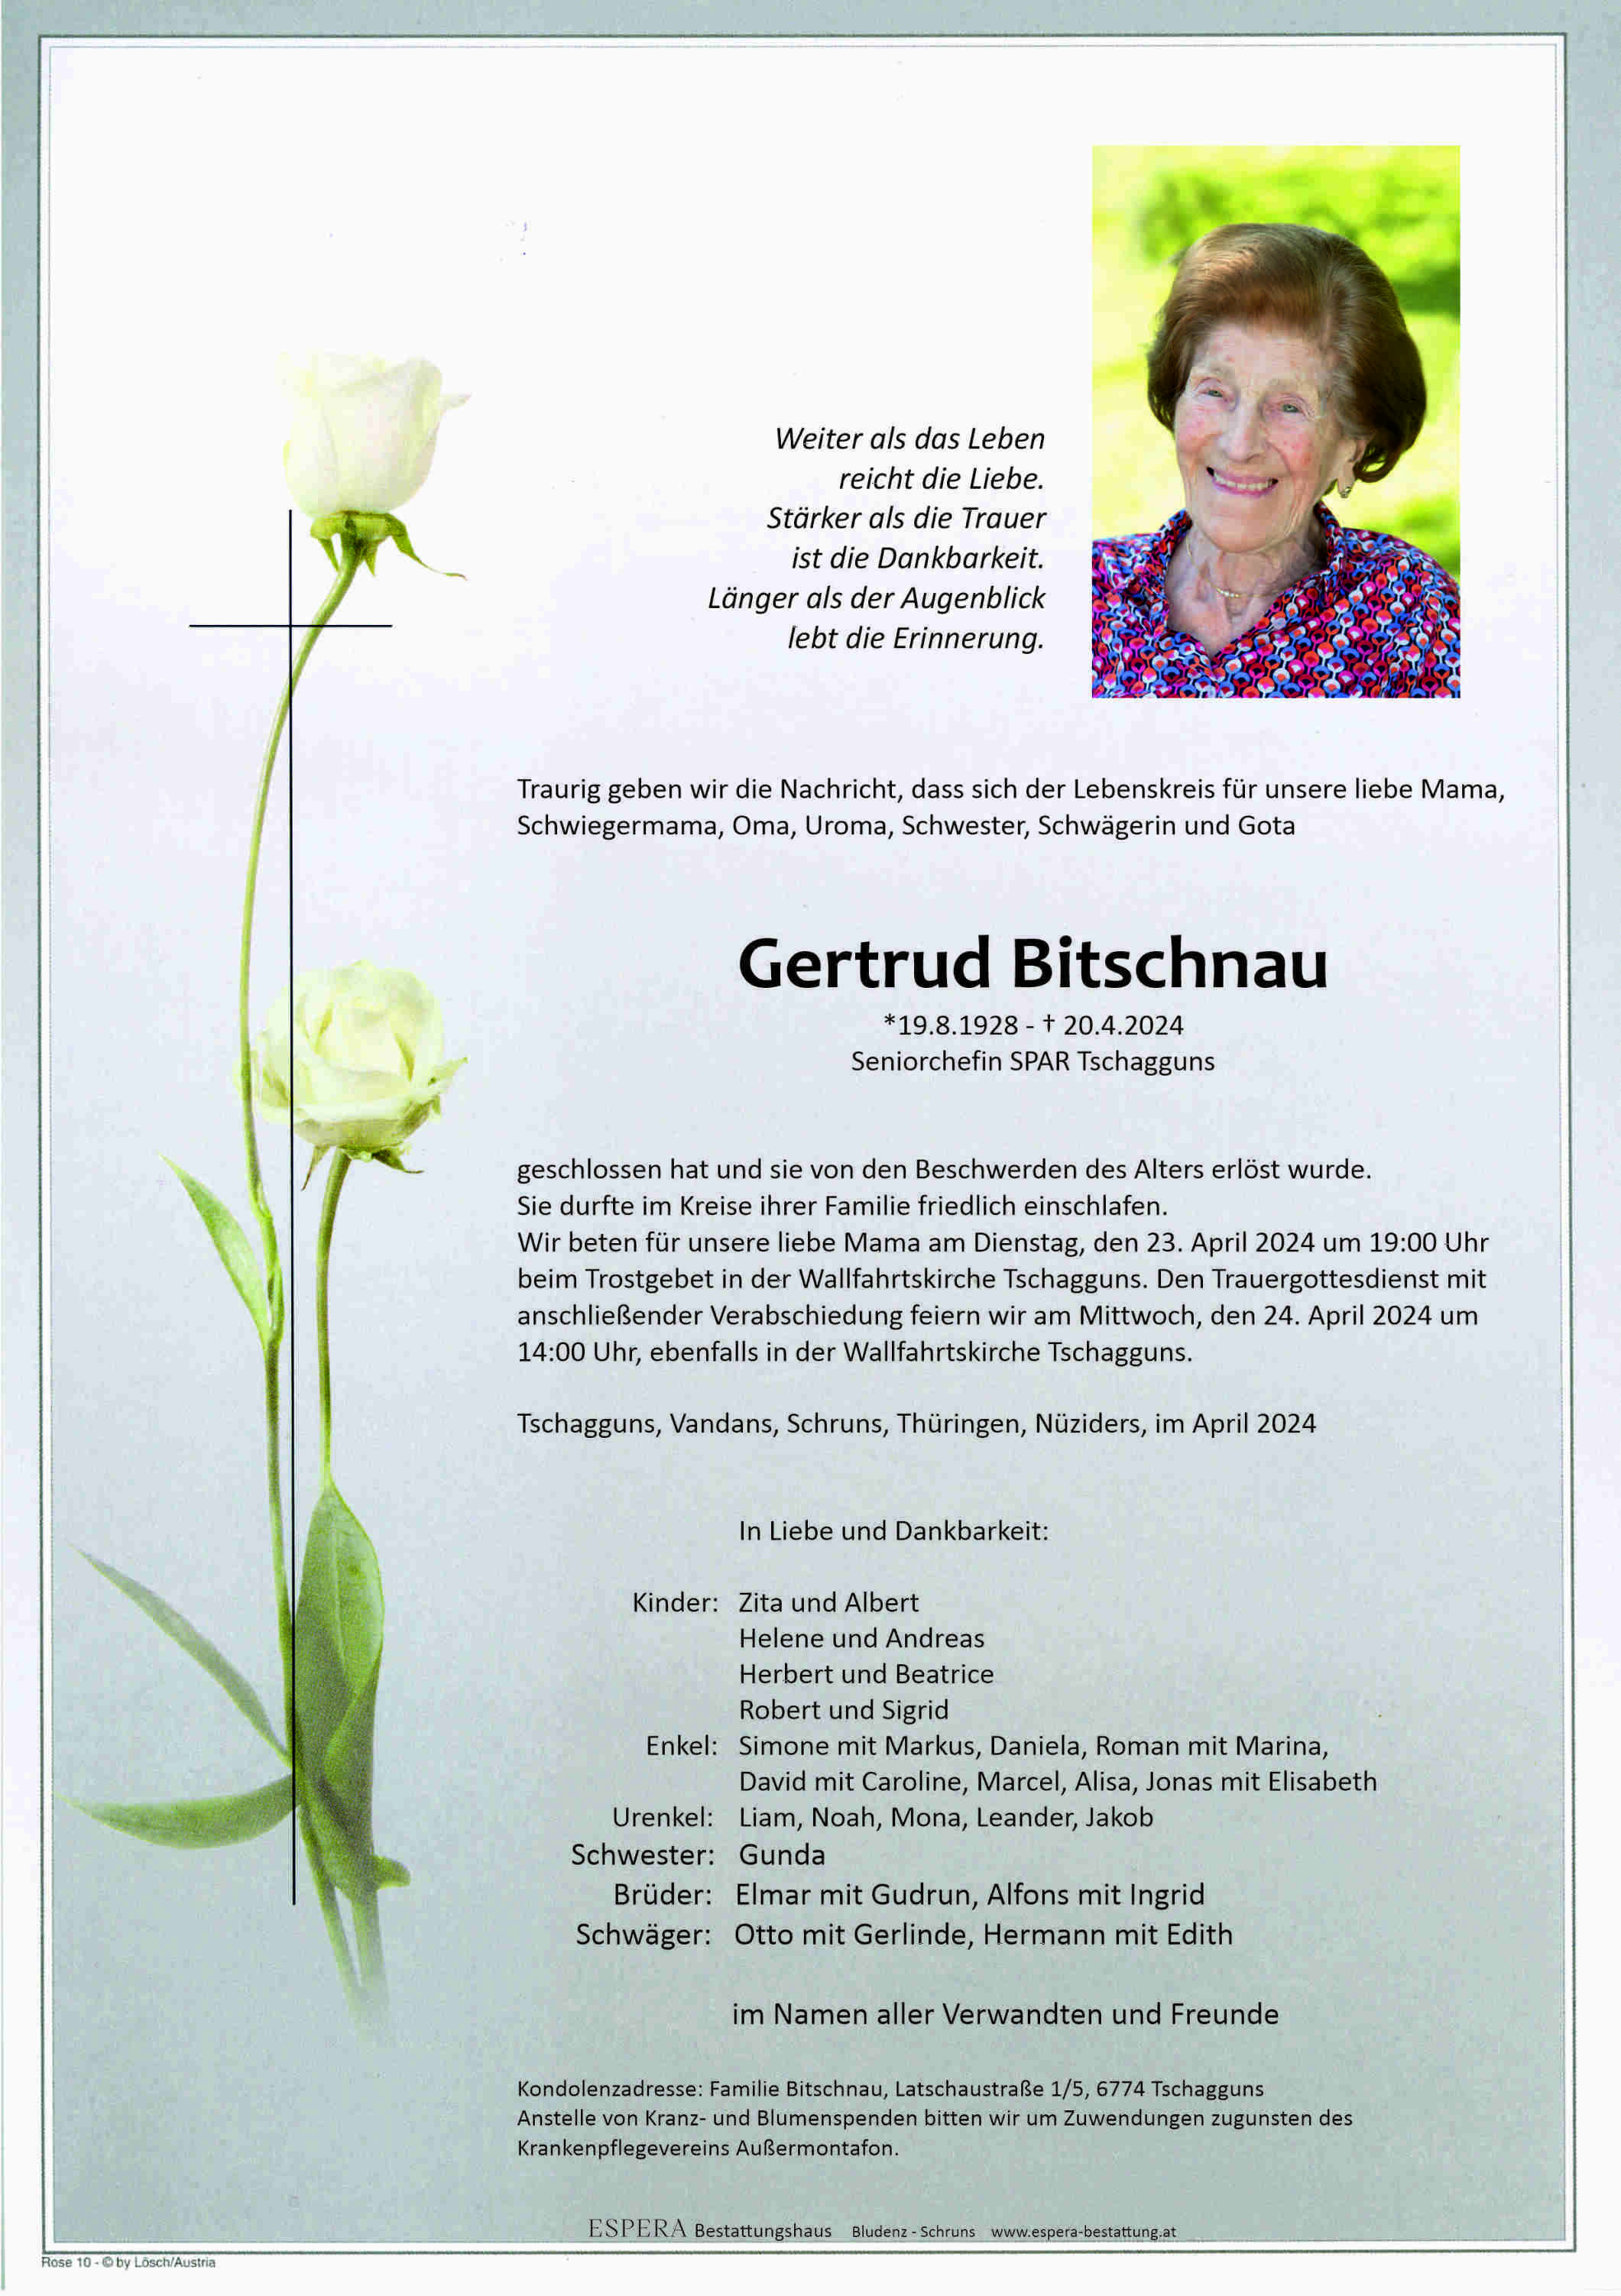 Gertrud Bitschnau